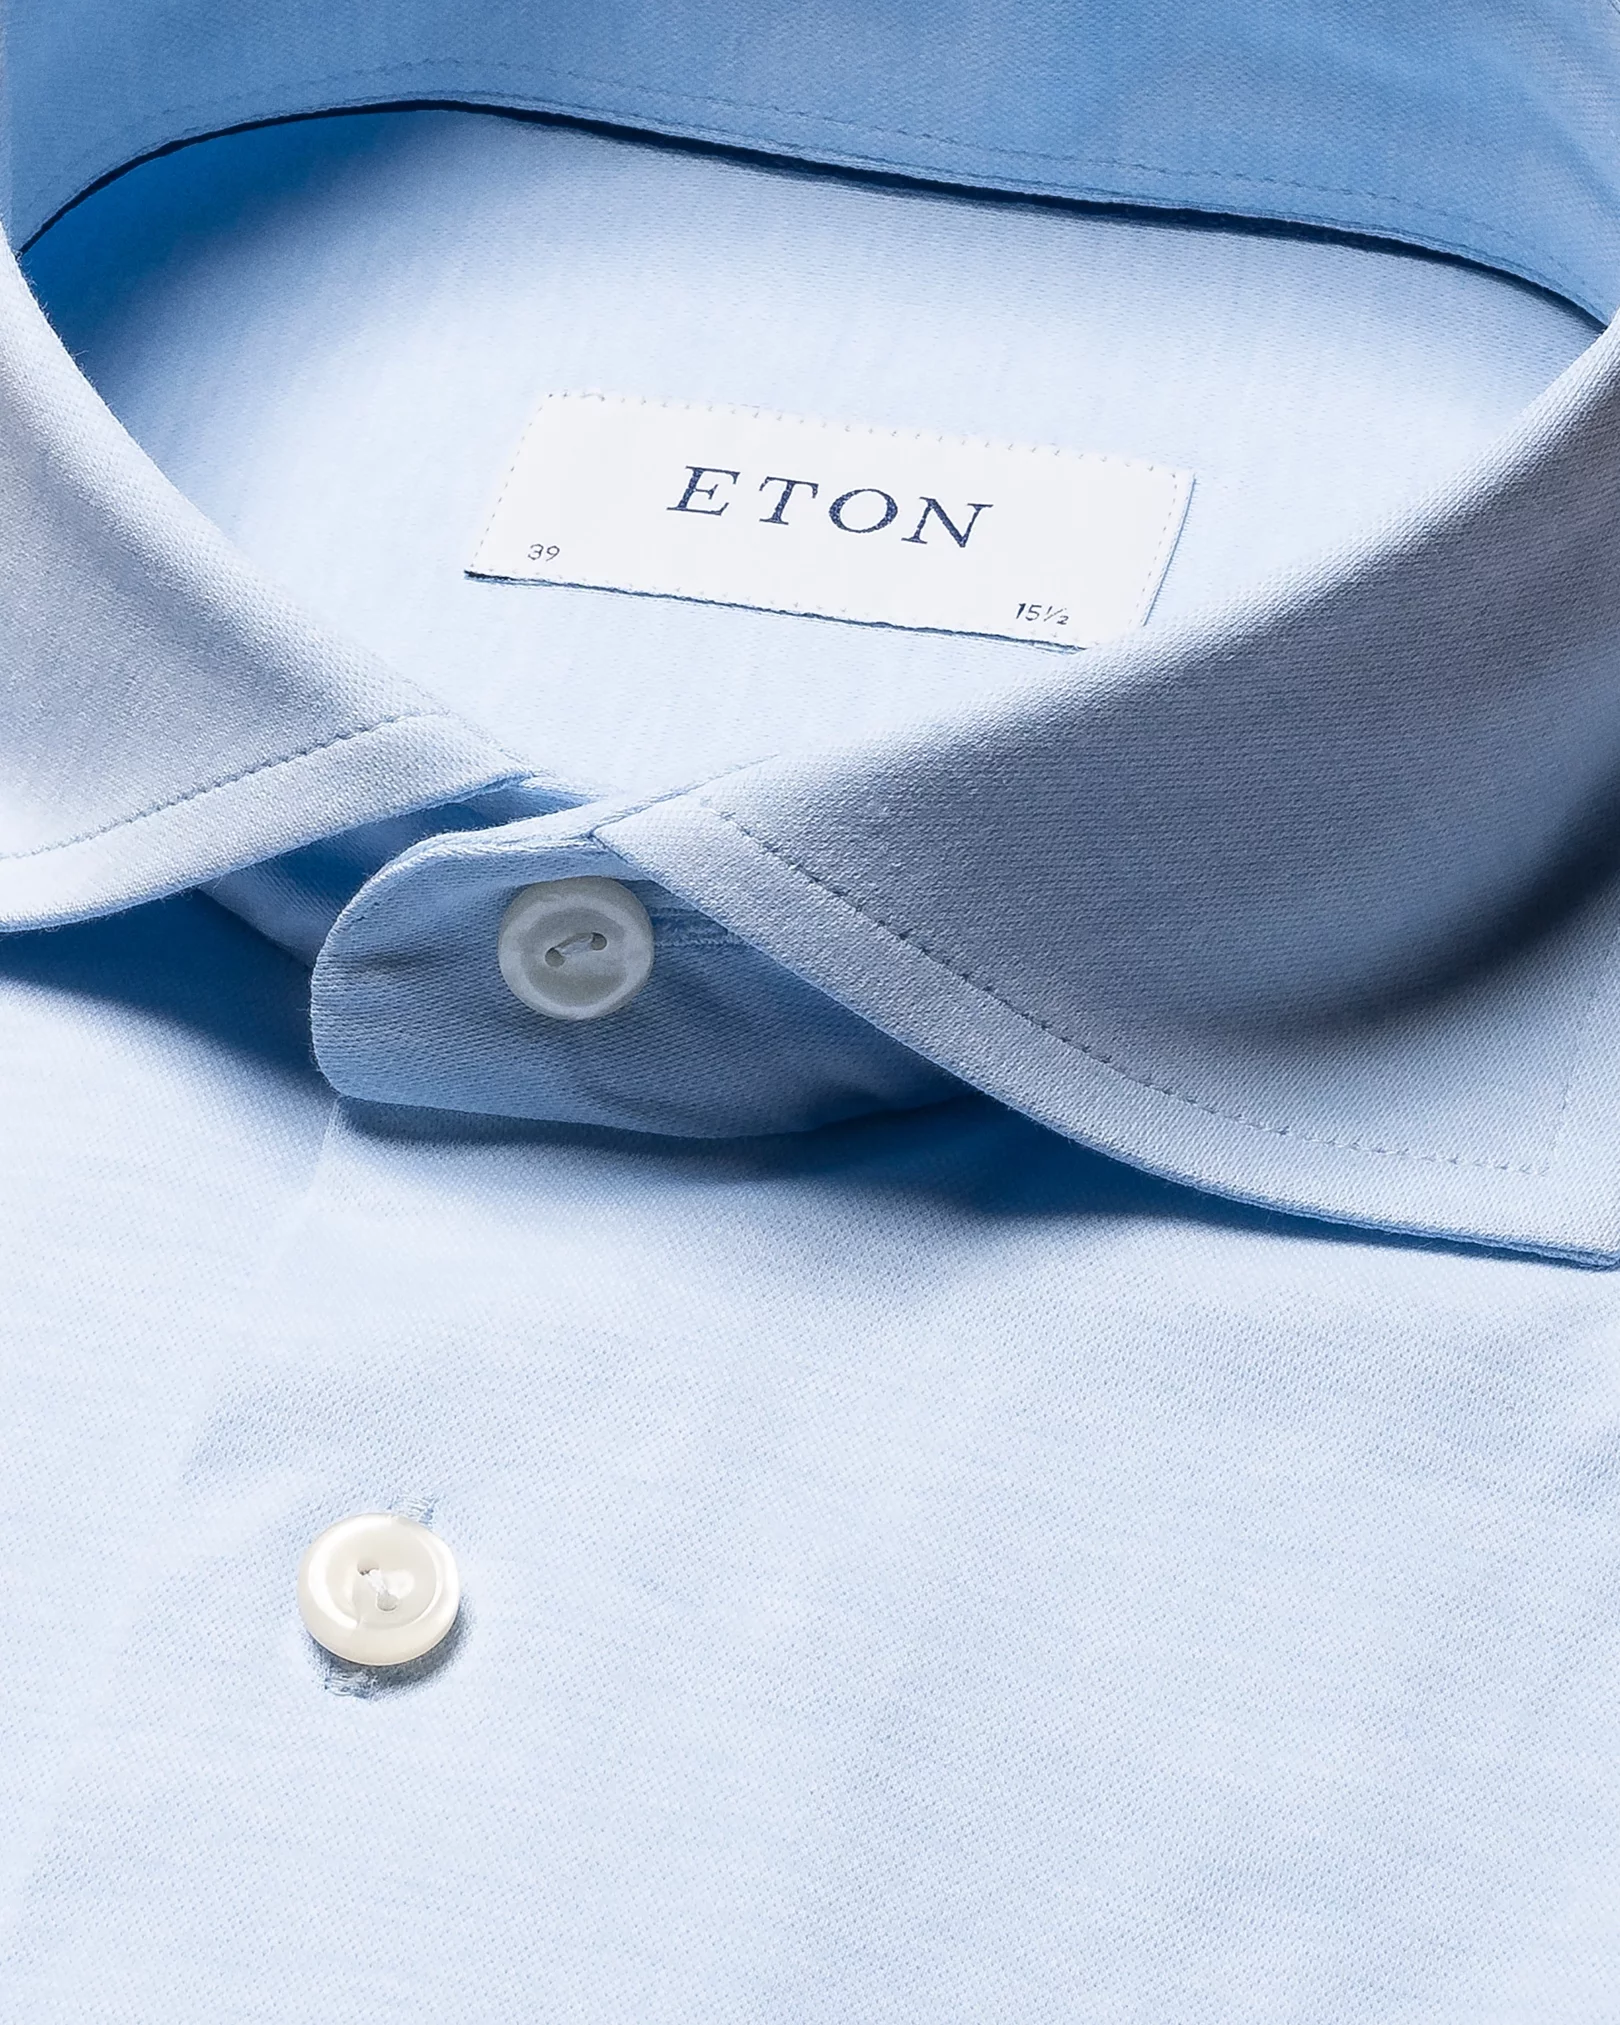 Eton - solid light blue stretch shirt